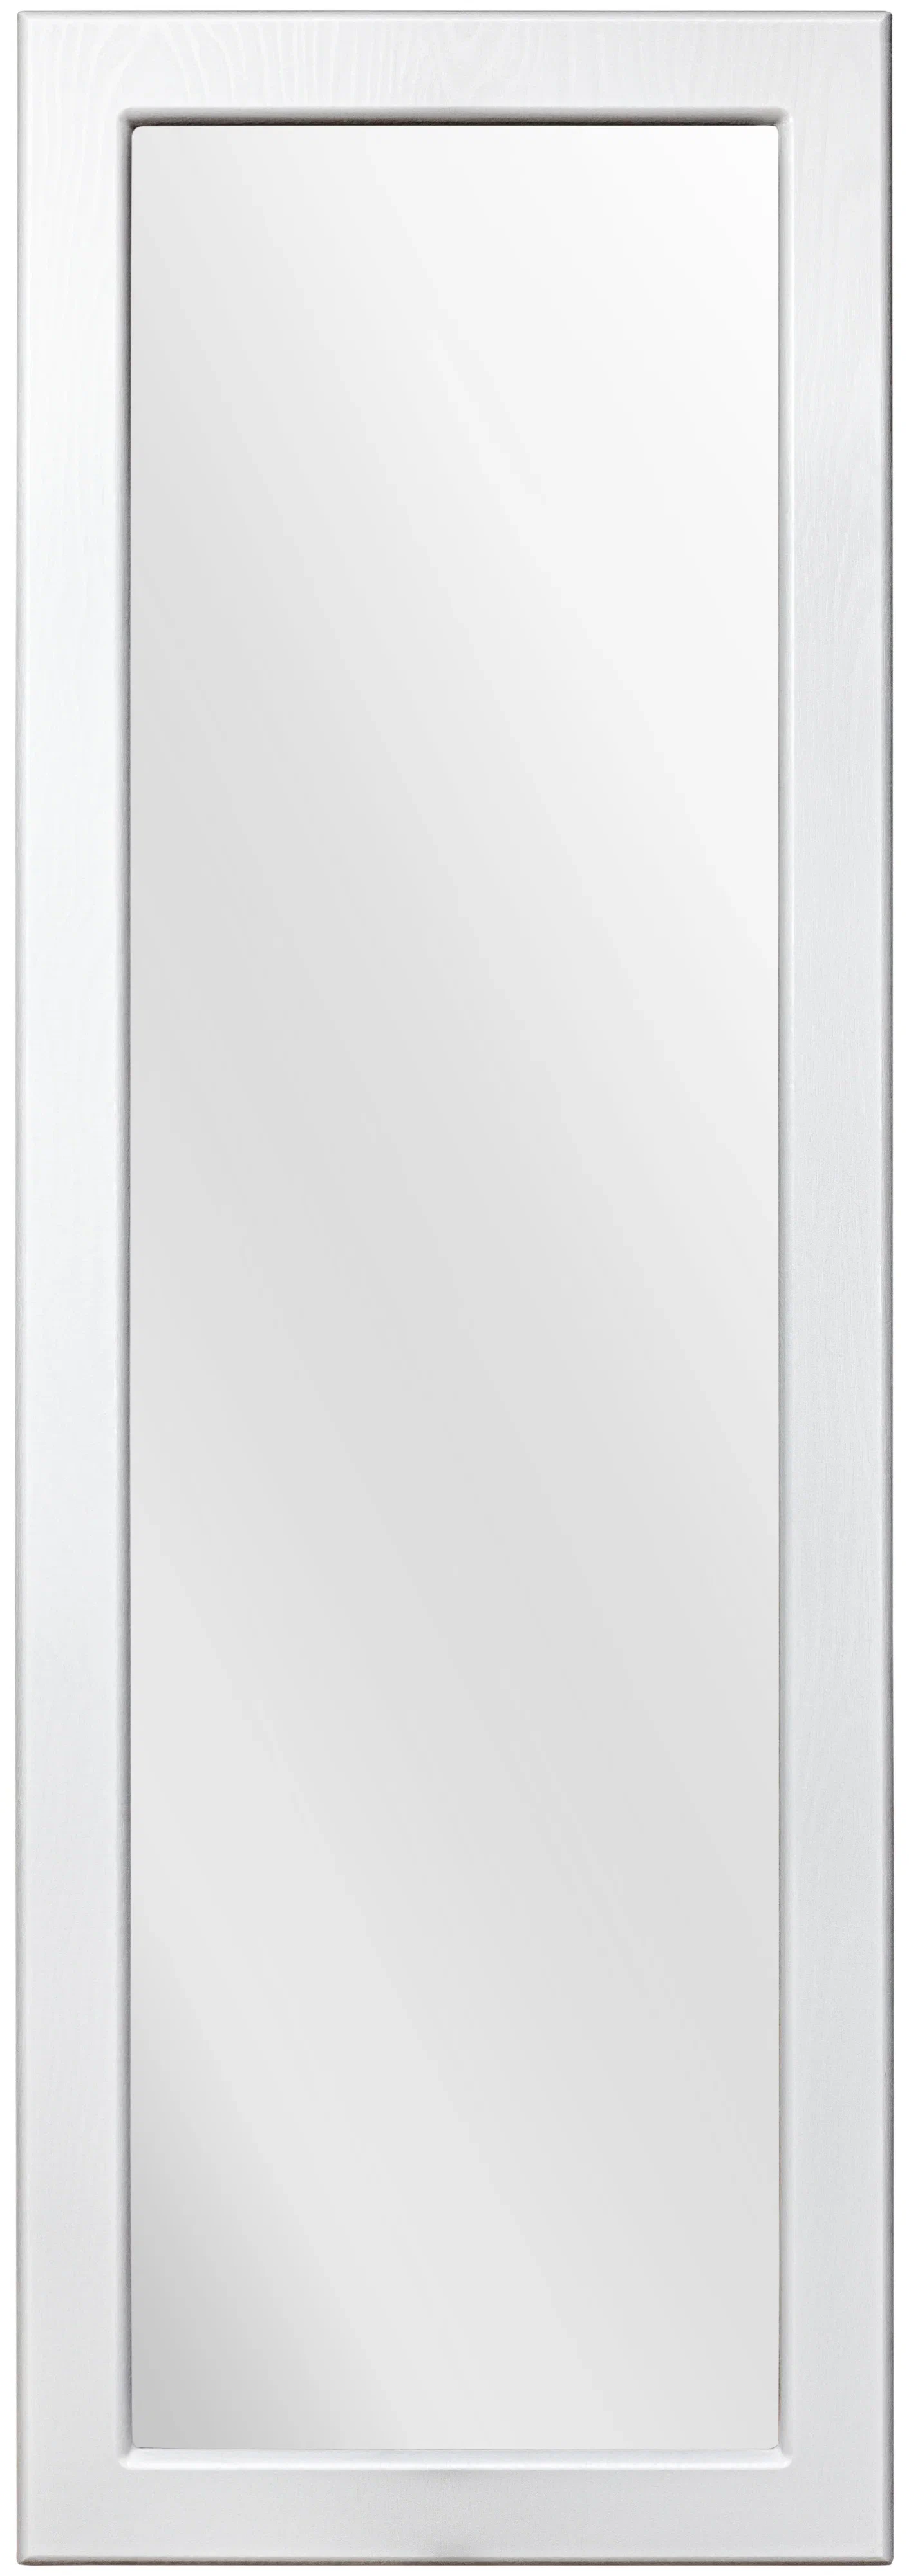 91021478 Зеркало с рамой Модель 1 Келли 38.5x112 см цвет белый STLM-0444833 ПРАЙМ